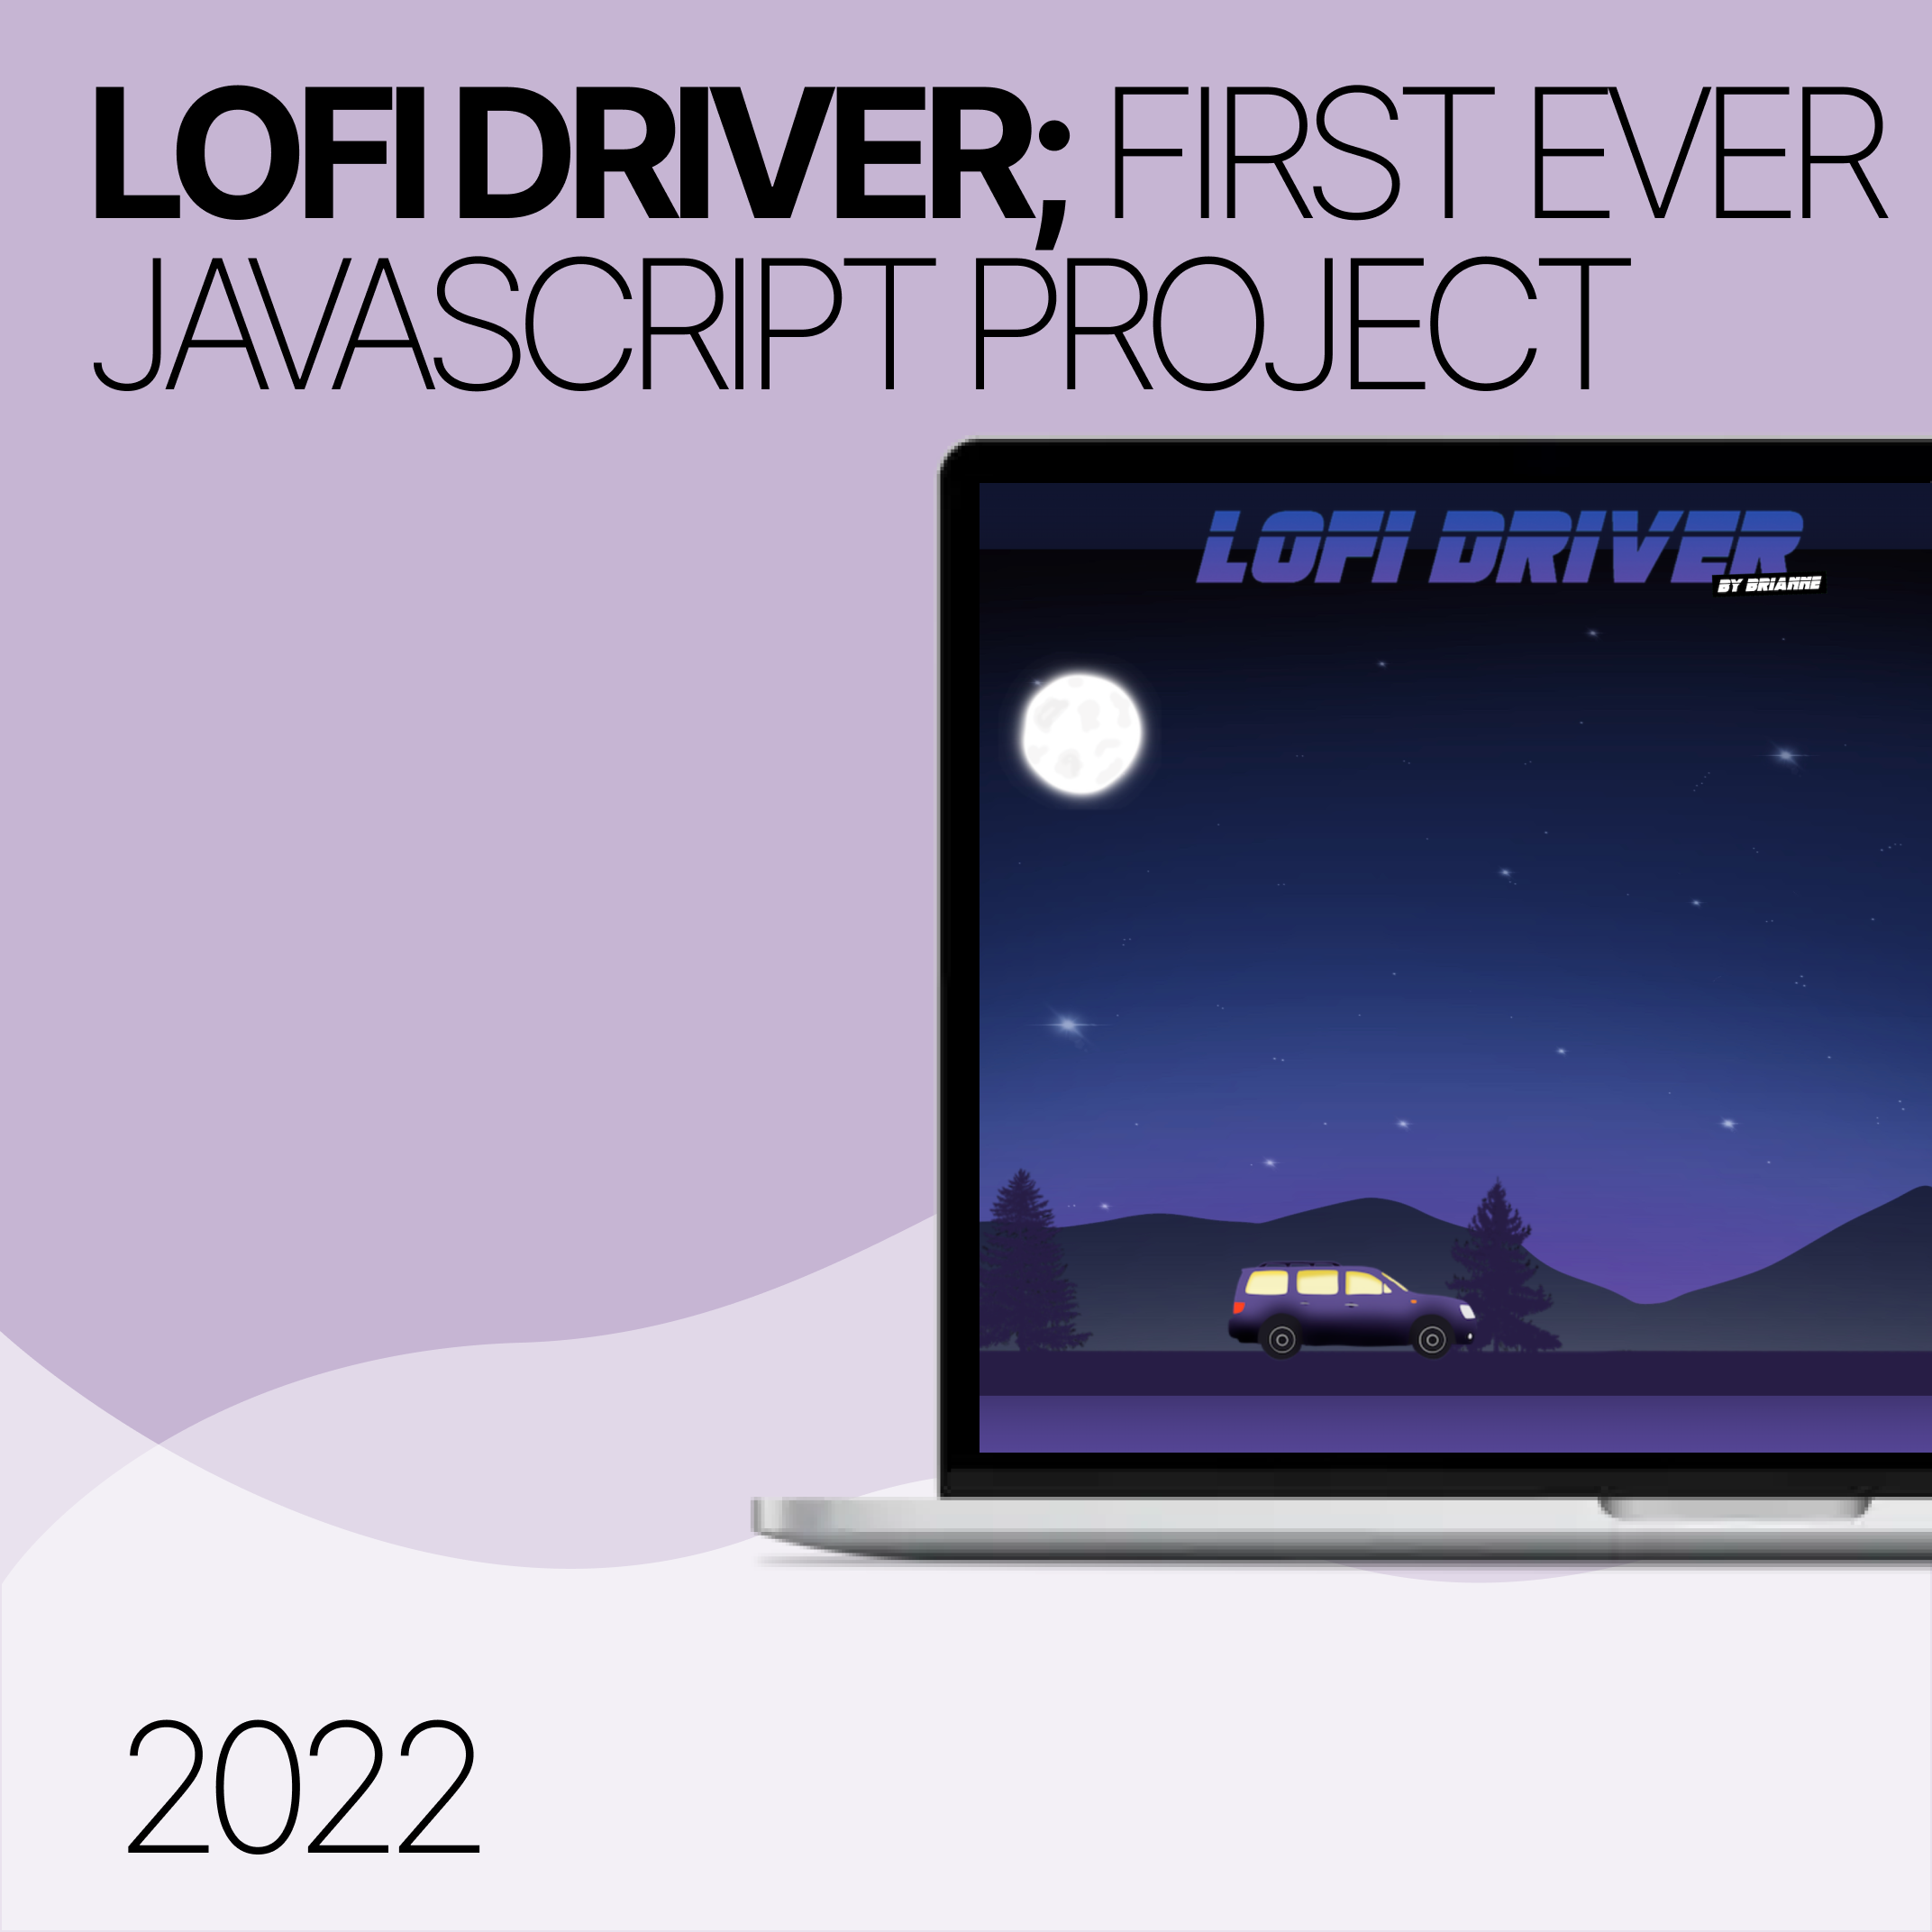 Lofi Driver: First ever Javascript project